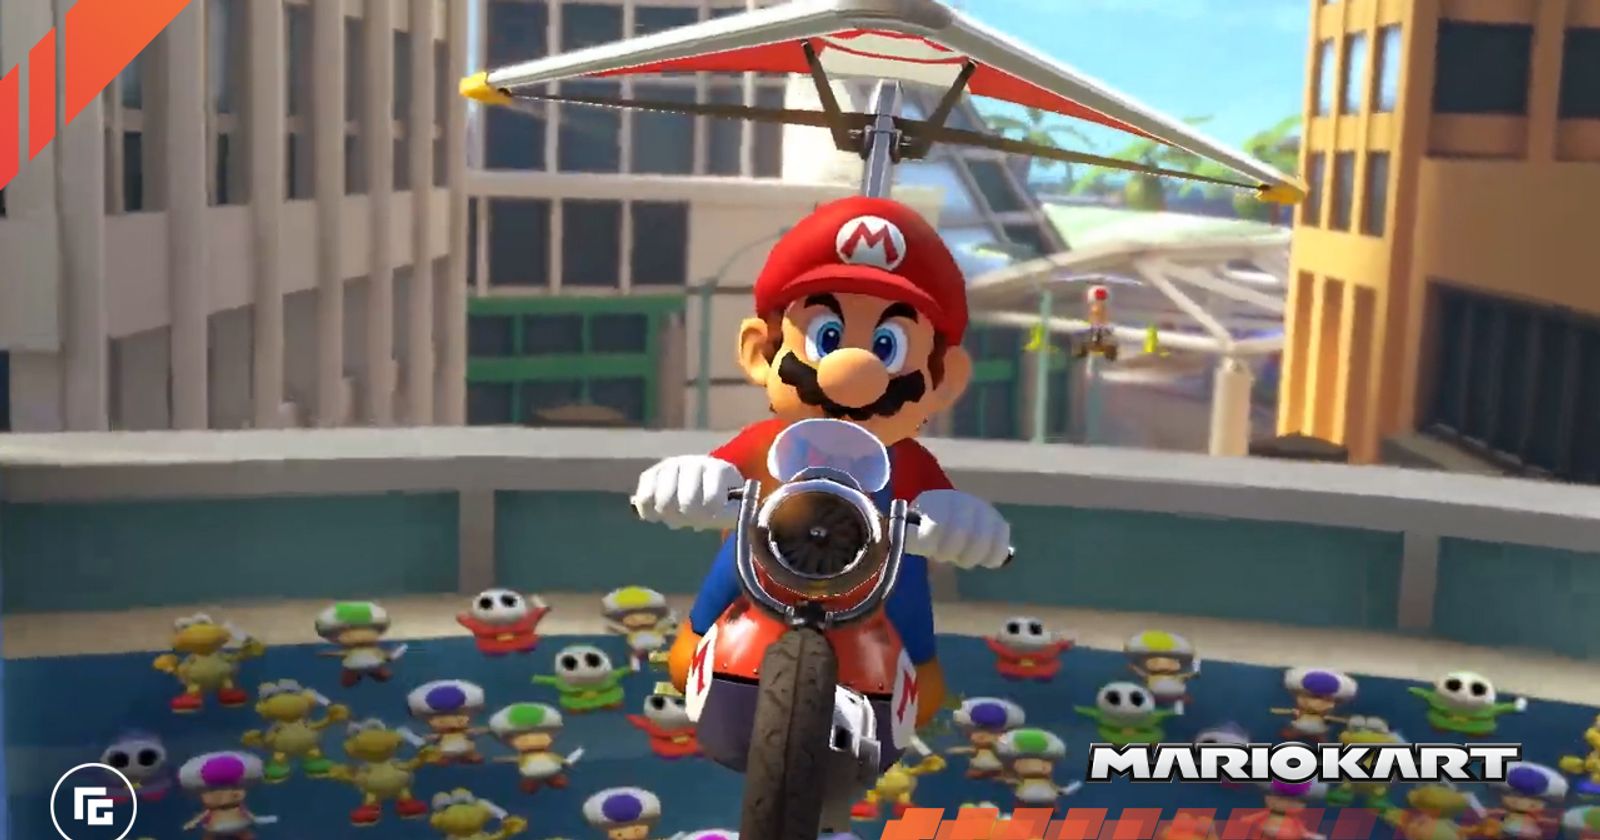 Nintendo is sunsetting Mario Kart Tour next month